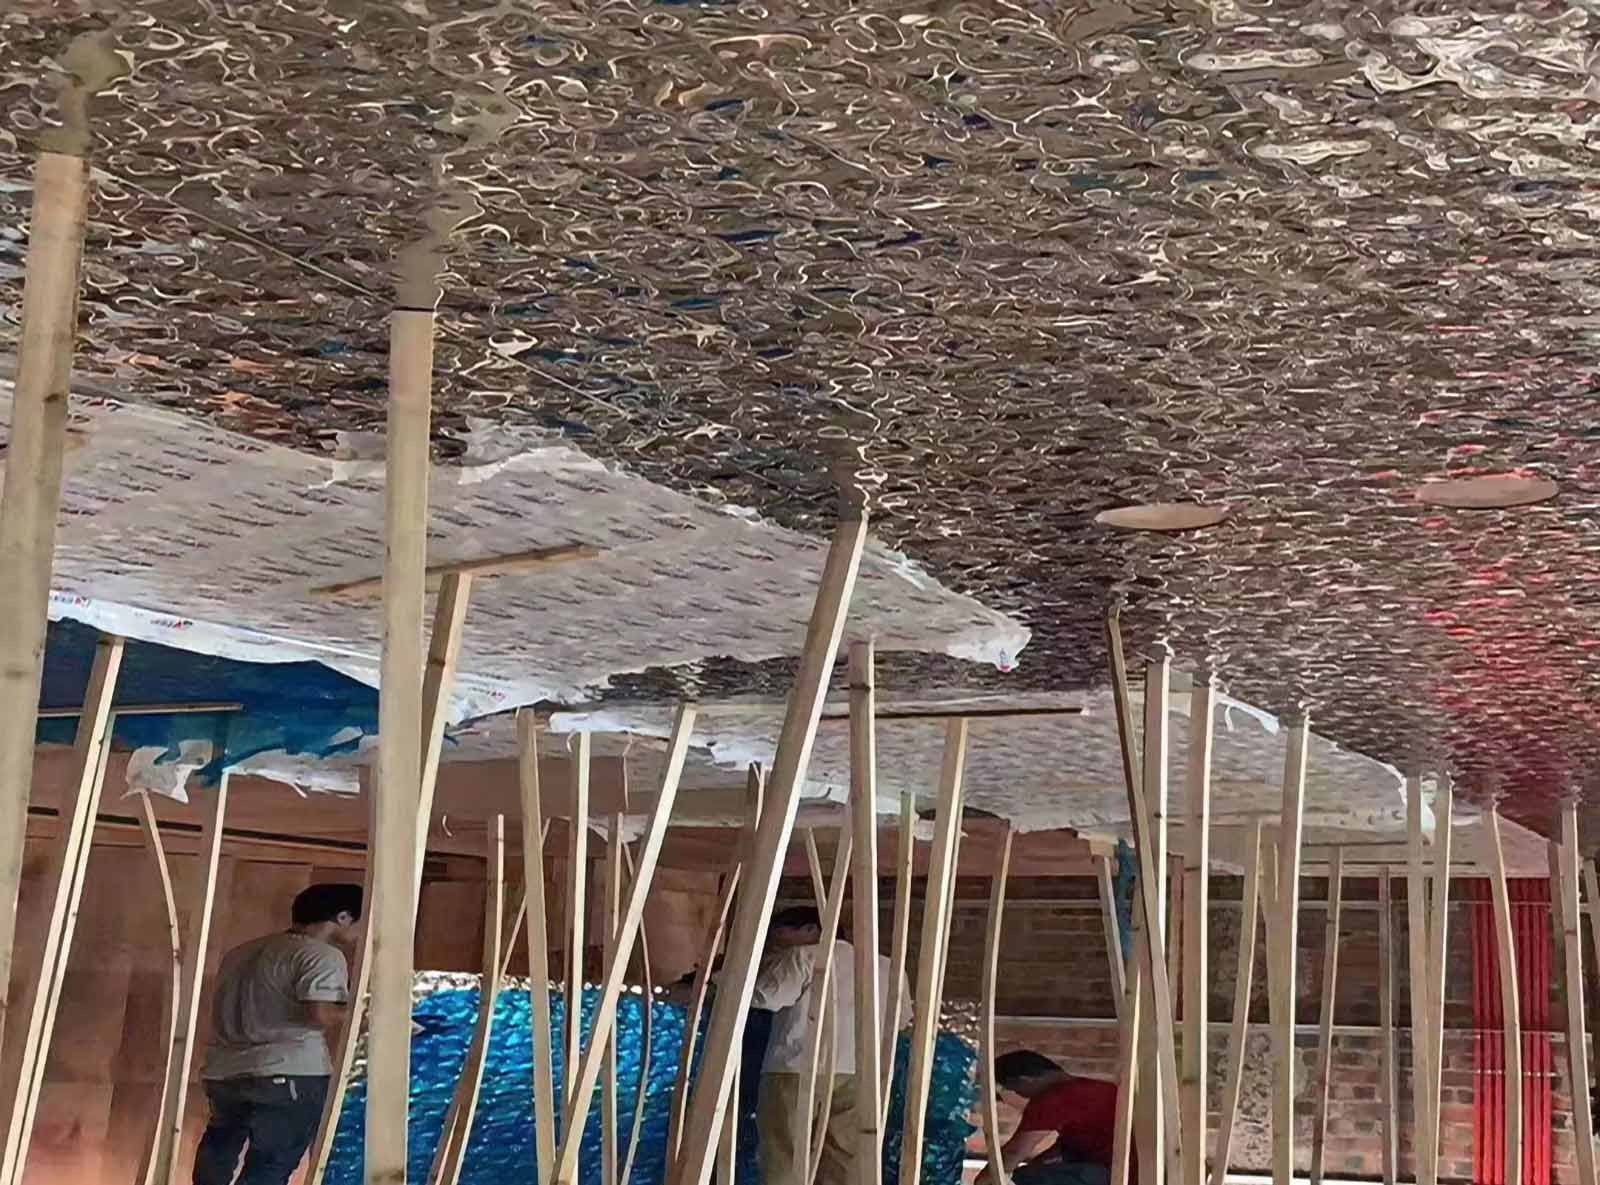 water ripple ceiling